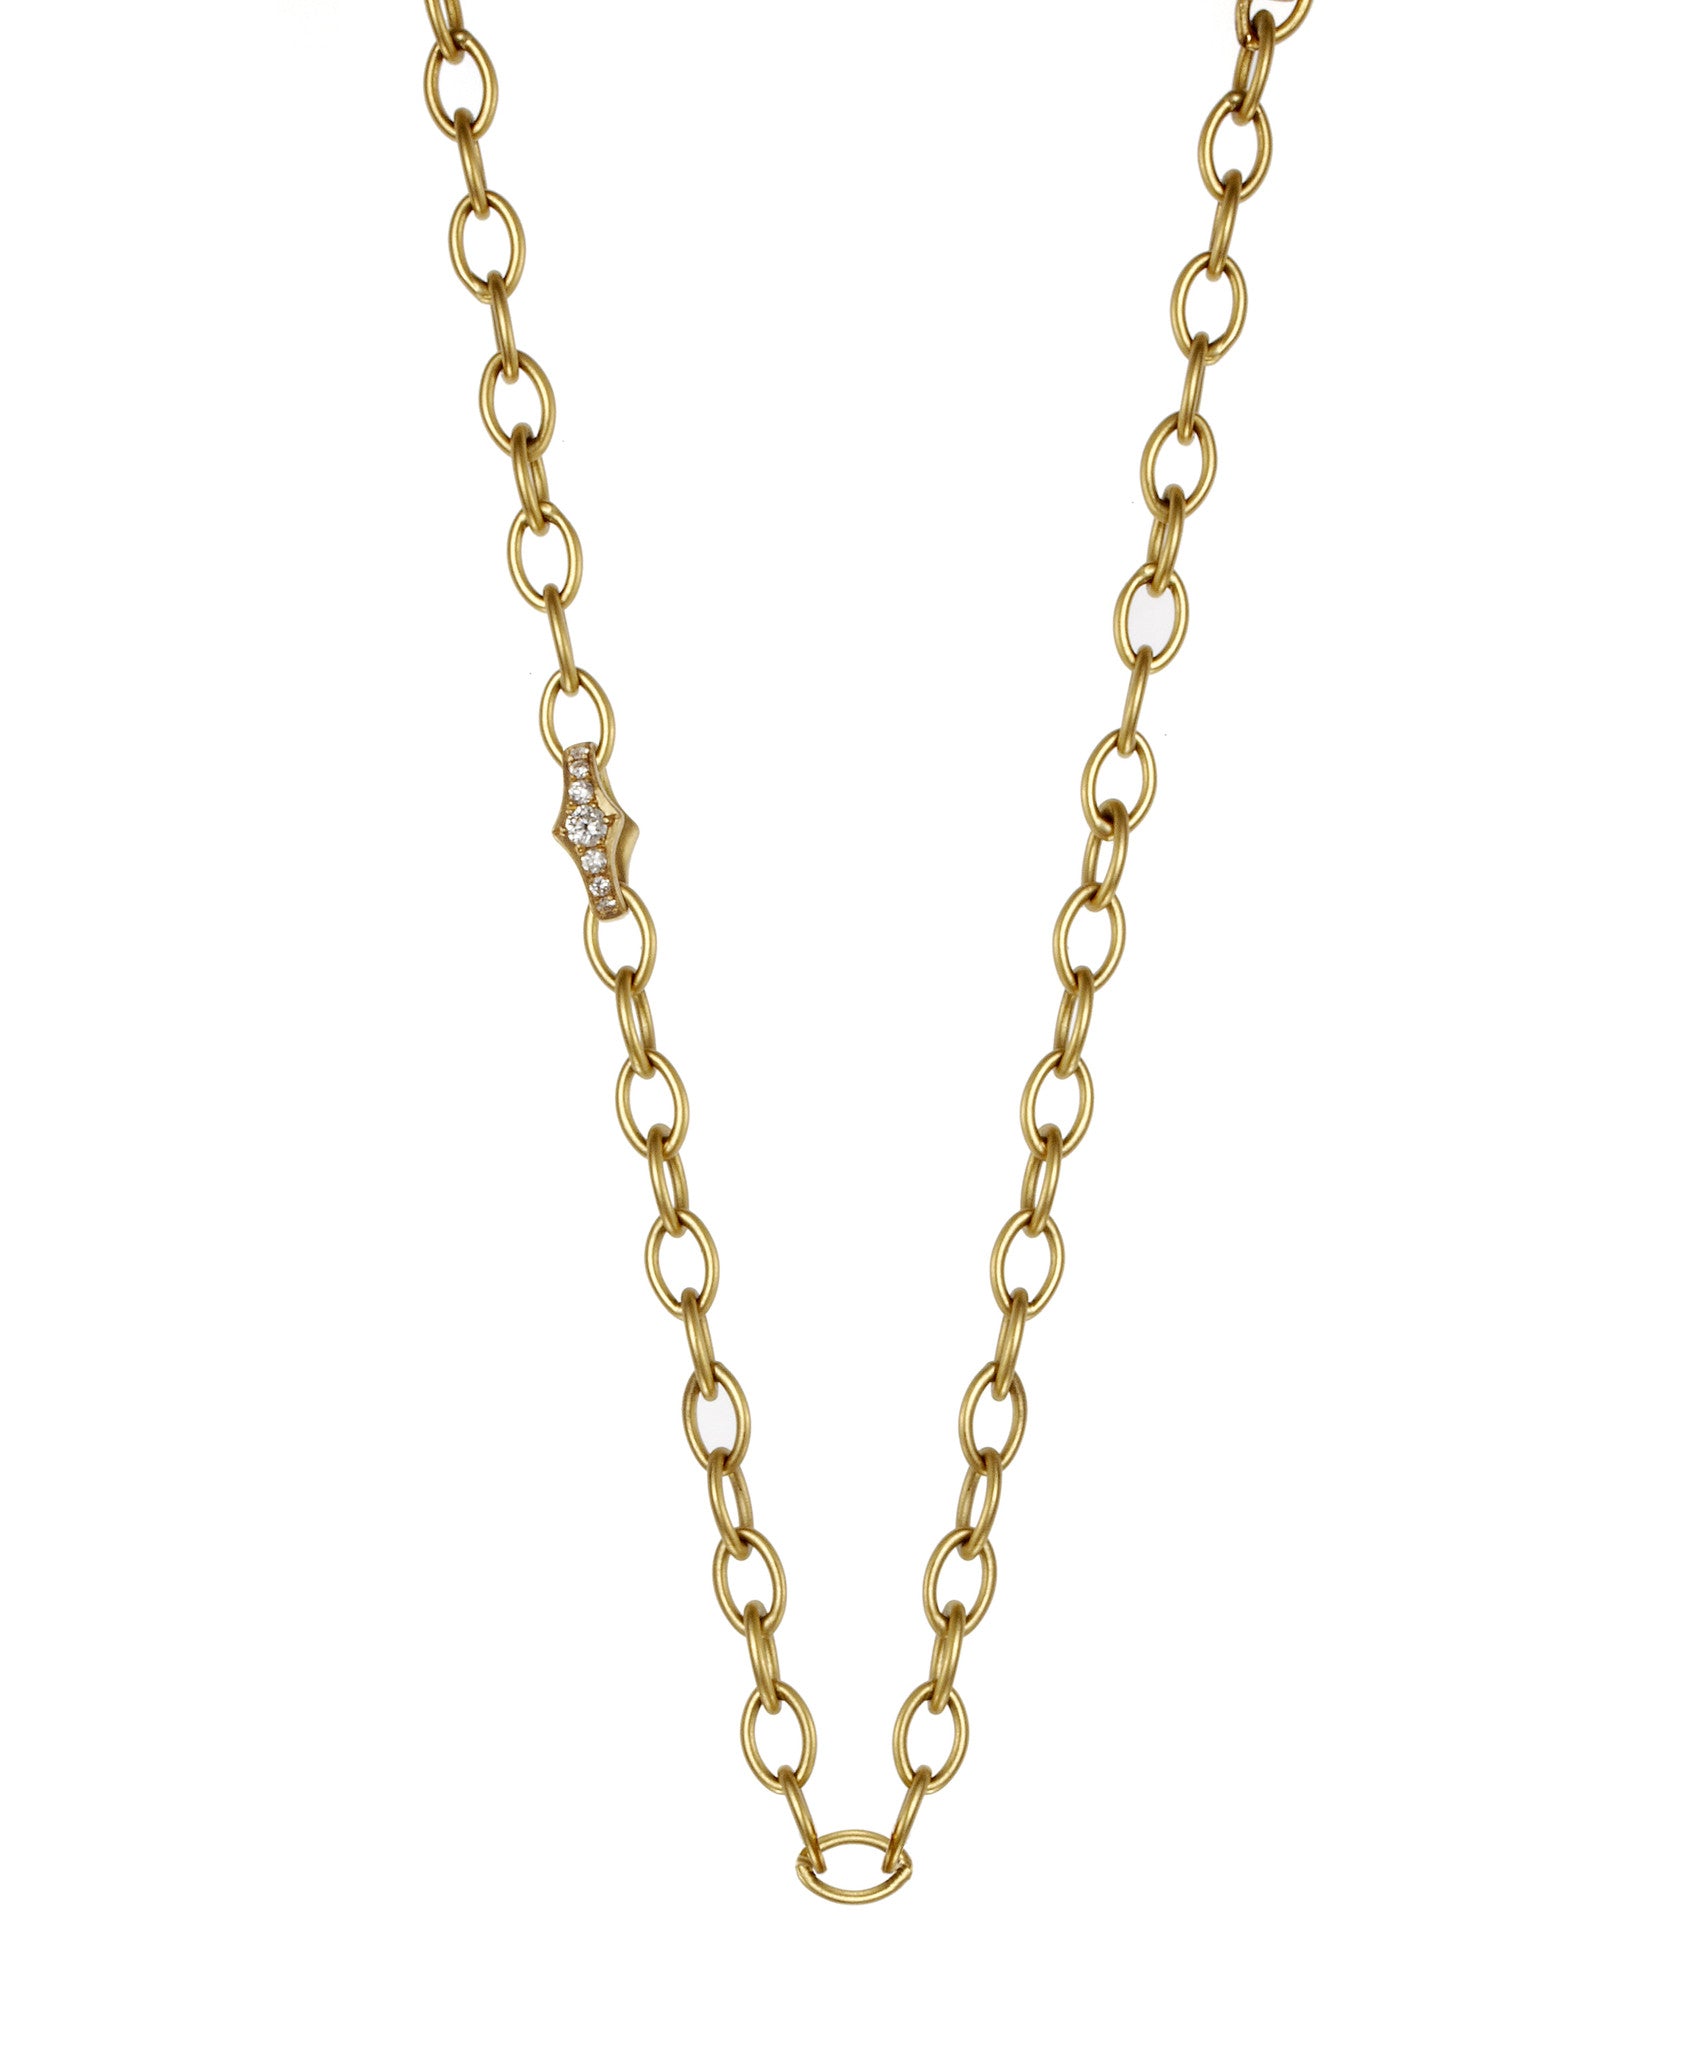 Oval Link Necklace with Pavé Link Motifs - Anahita Jewelry